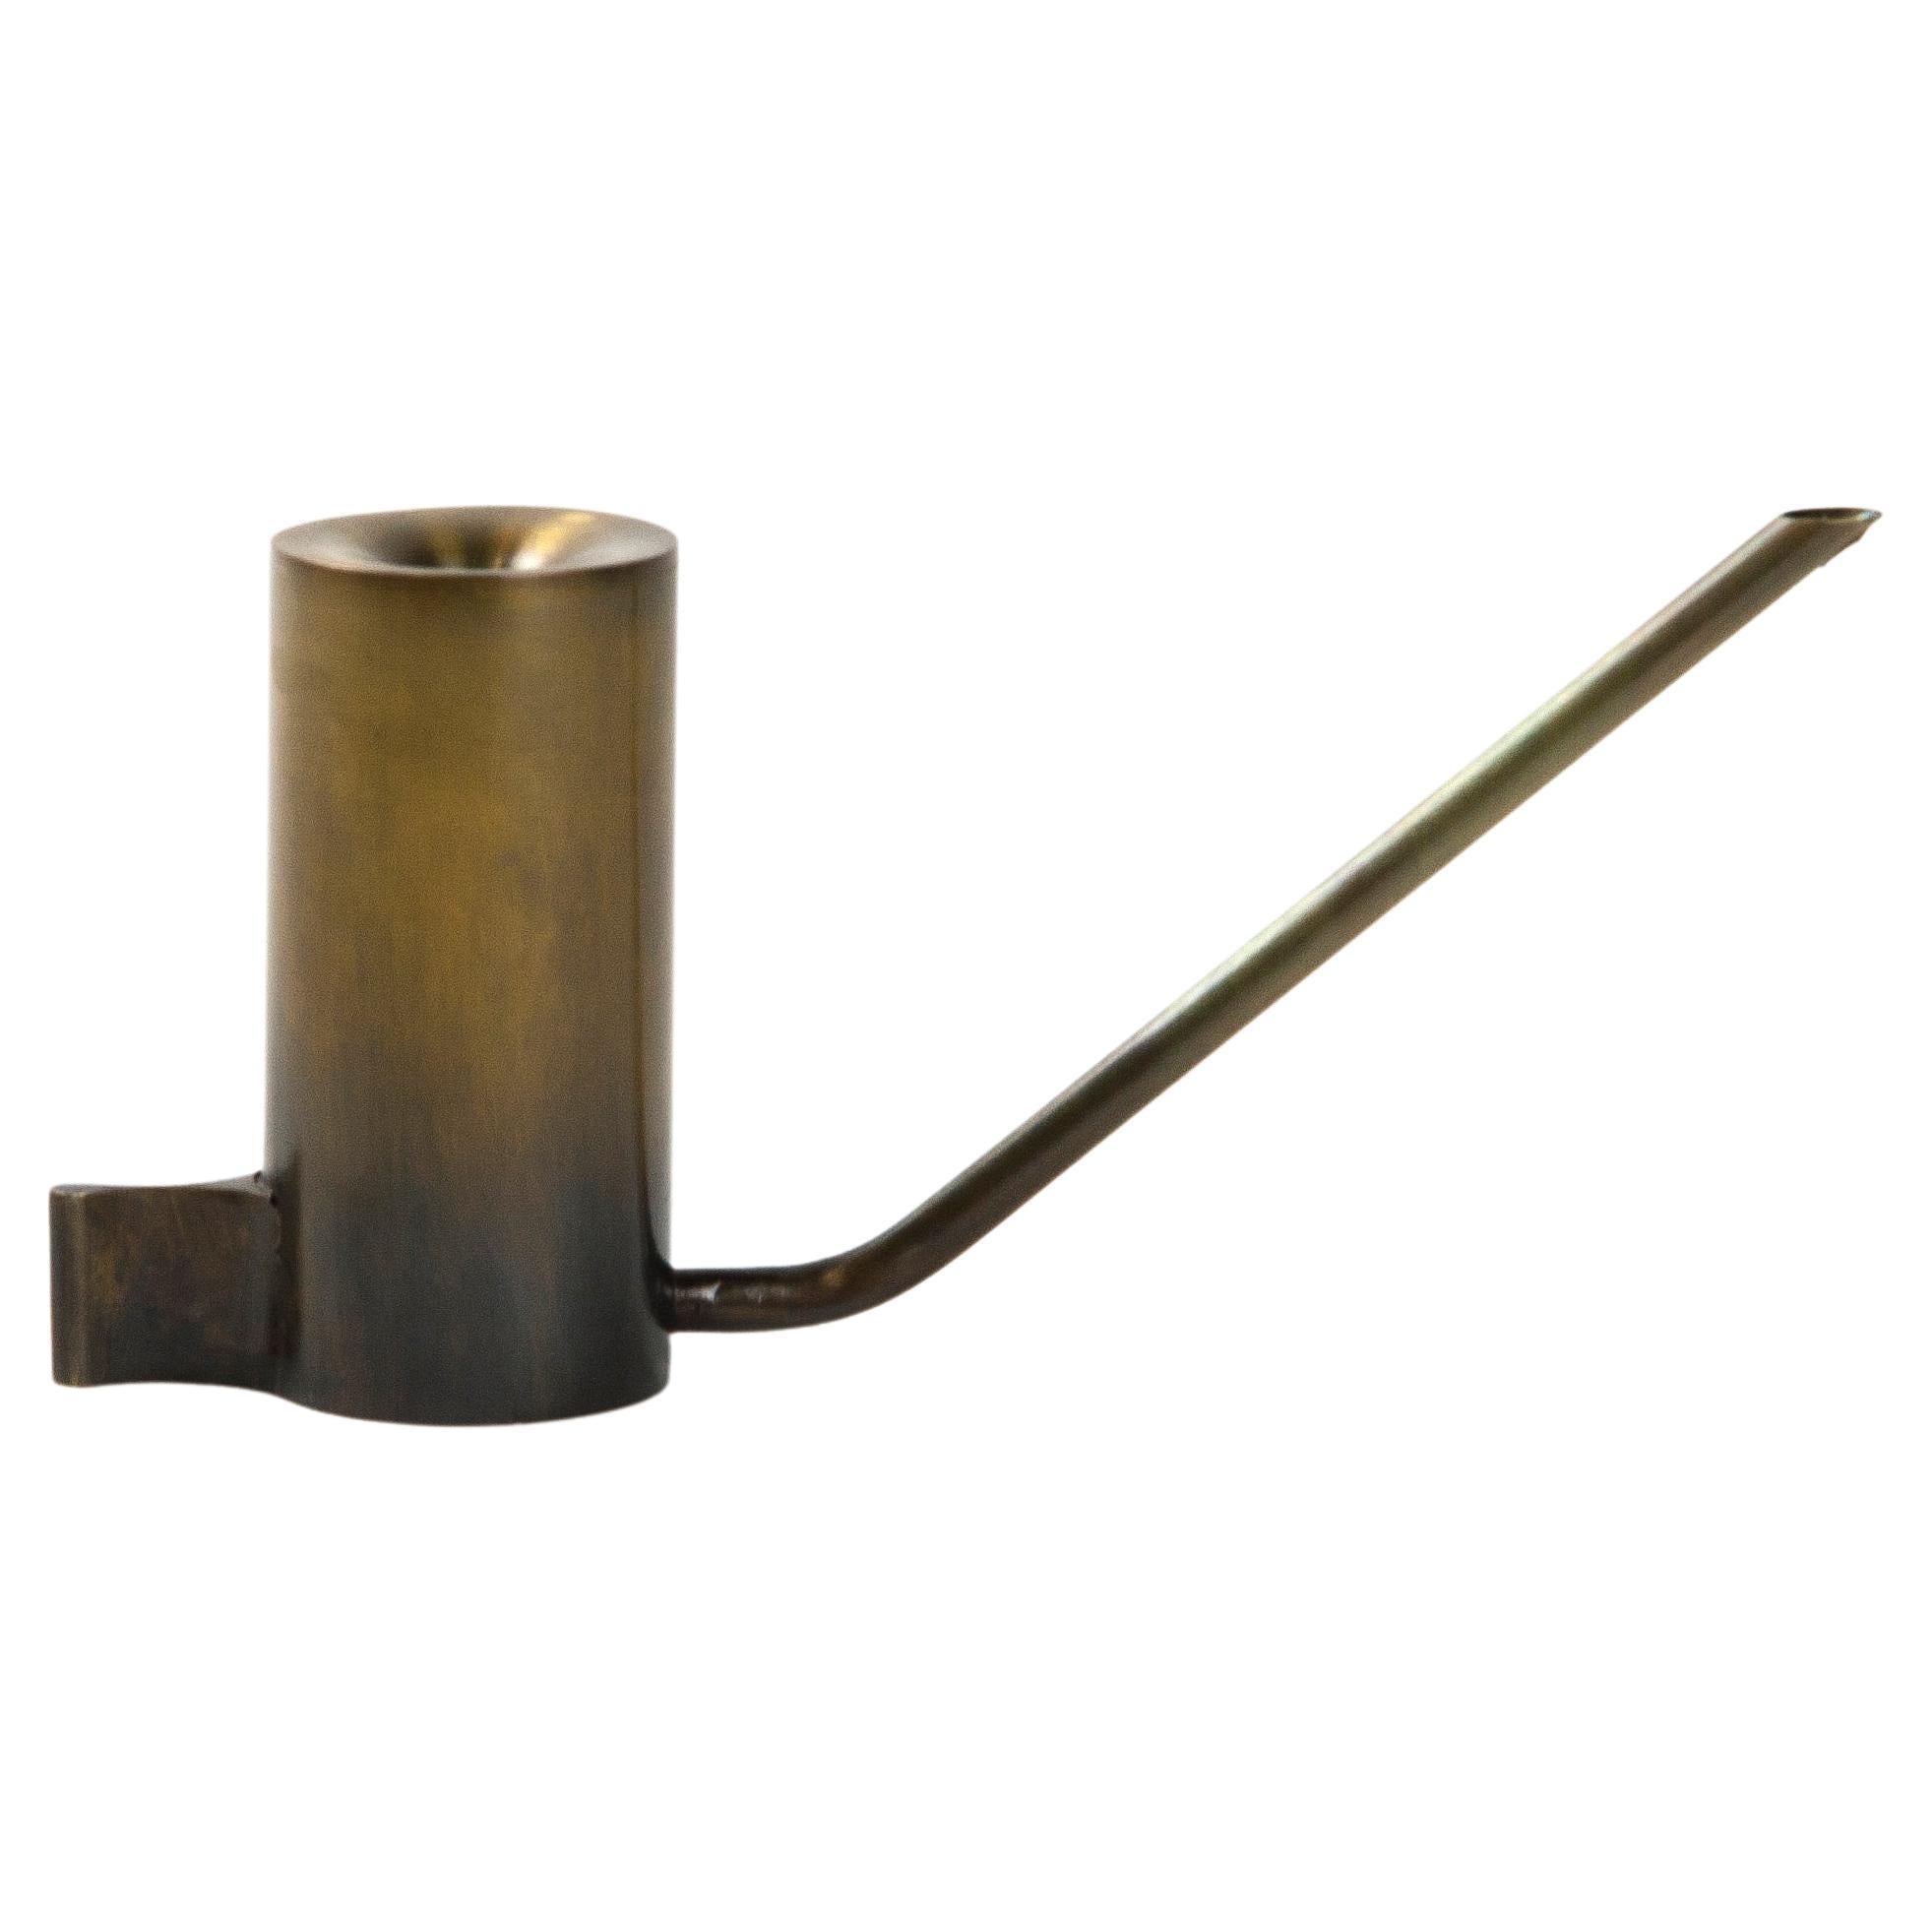 Brass Watering Can by Gentner Design